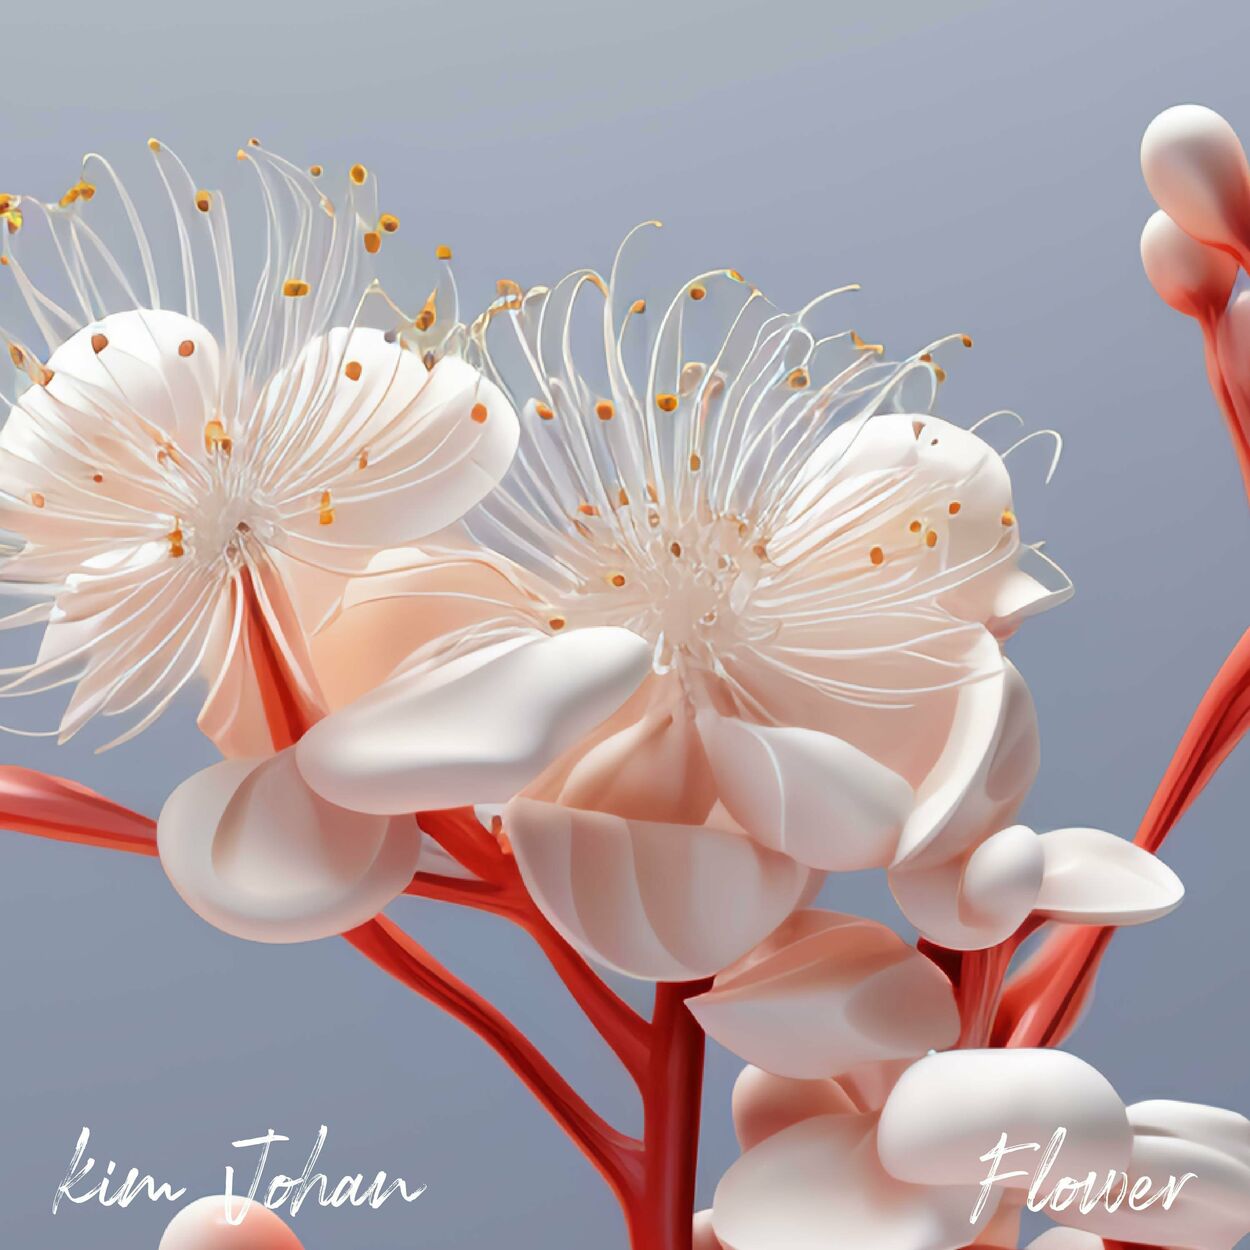 Johan Kim – Flower – Single